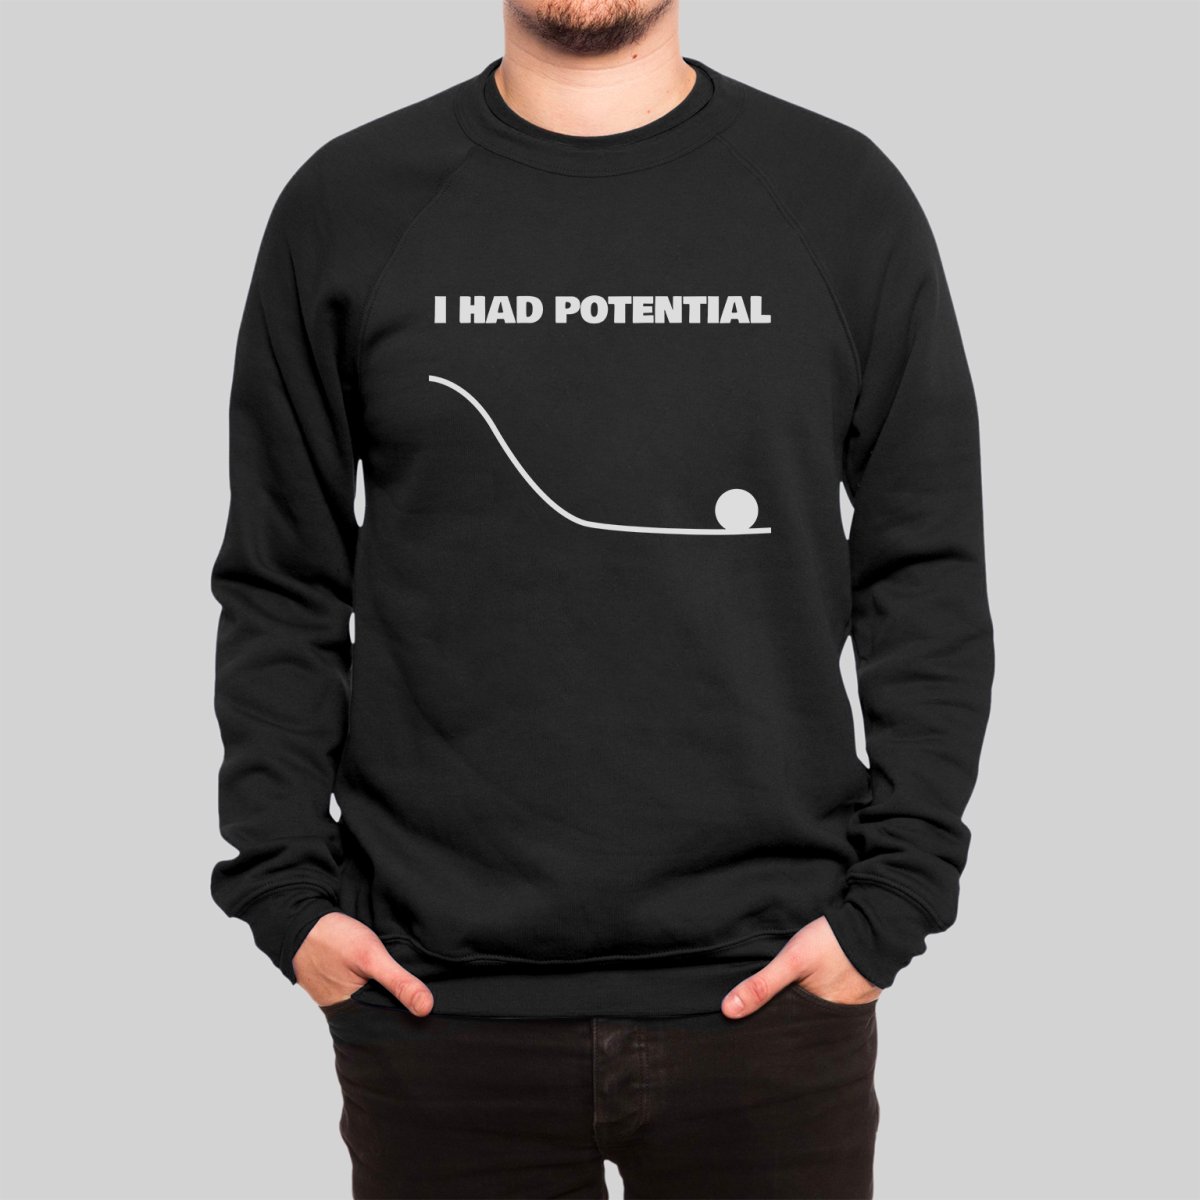 I Had Potential Sweatshirt - Geeksoutfit